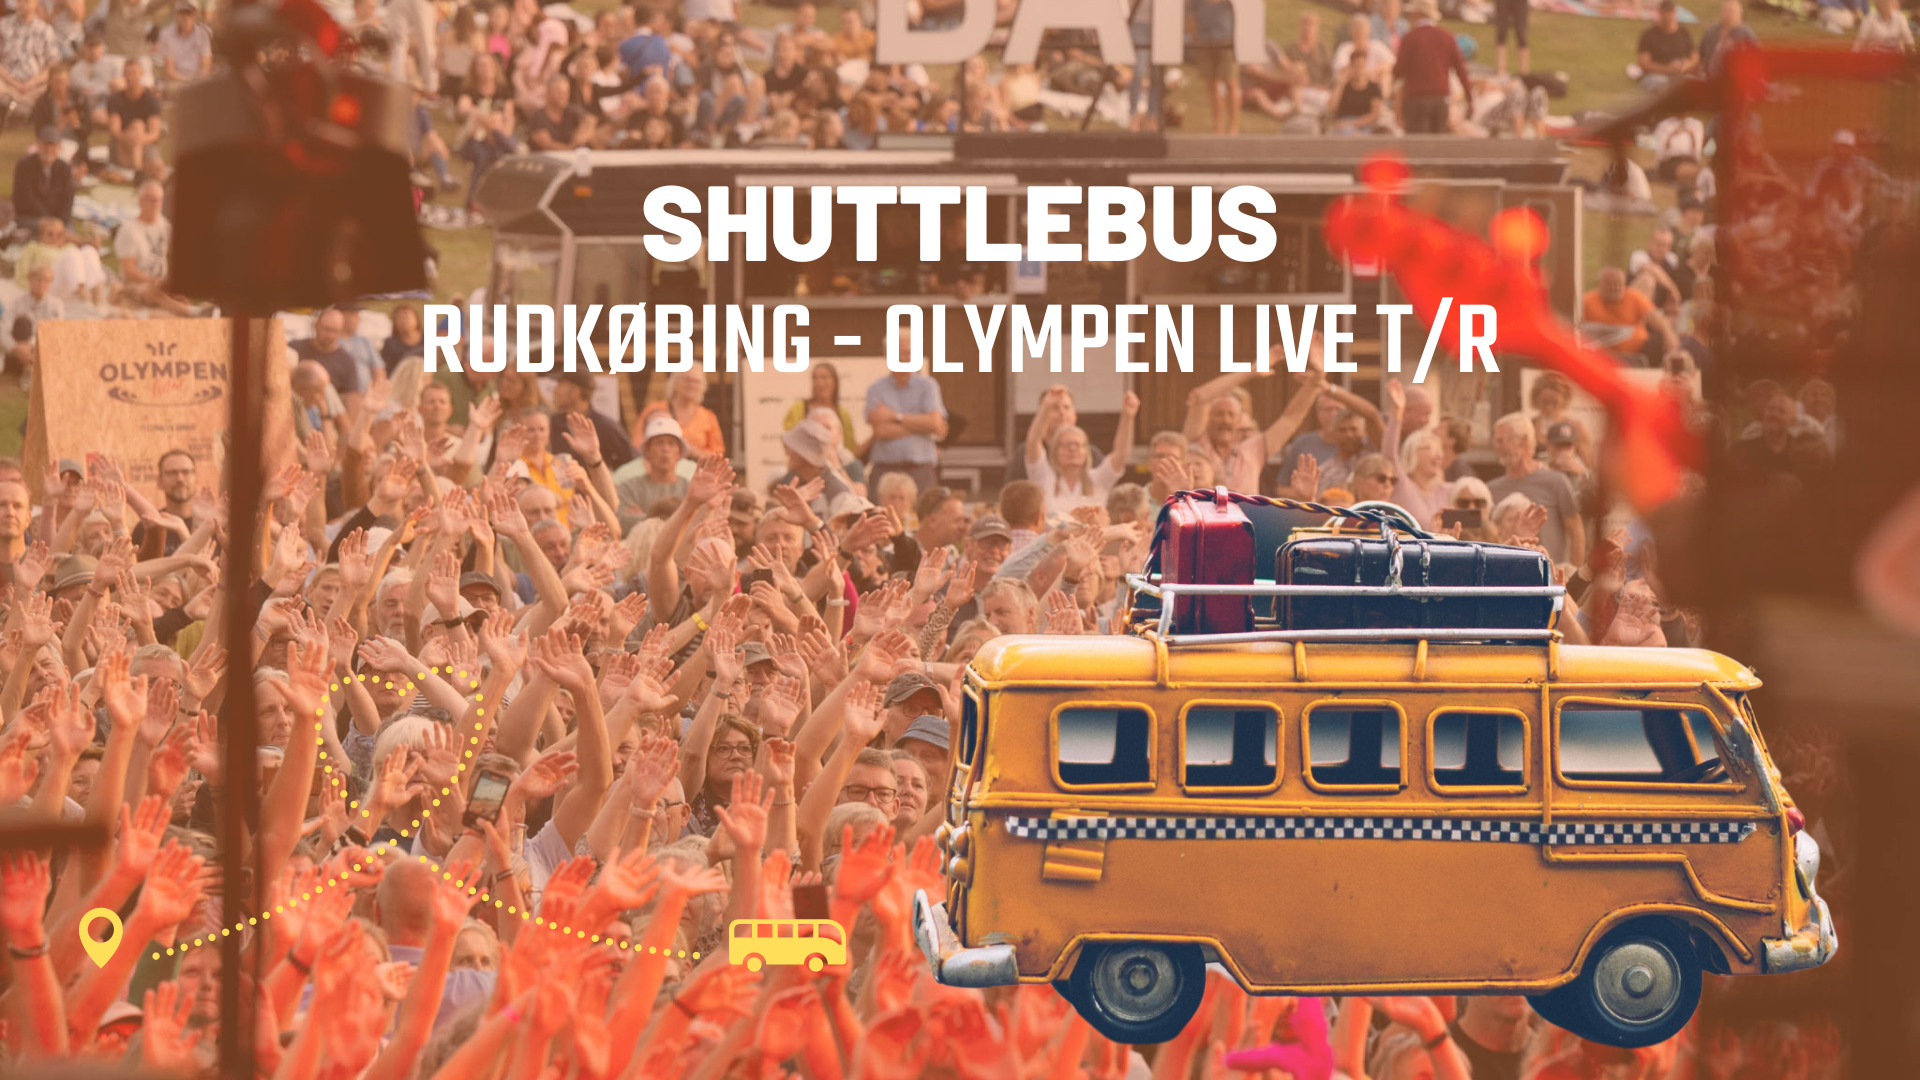 Shuttlebus Rudkøbing - Olympen Live